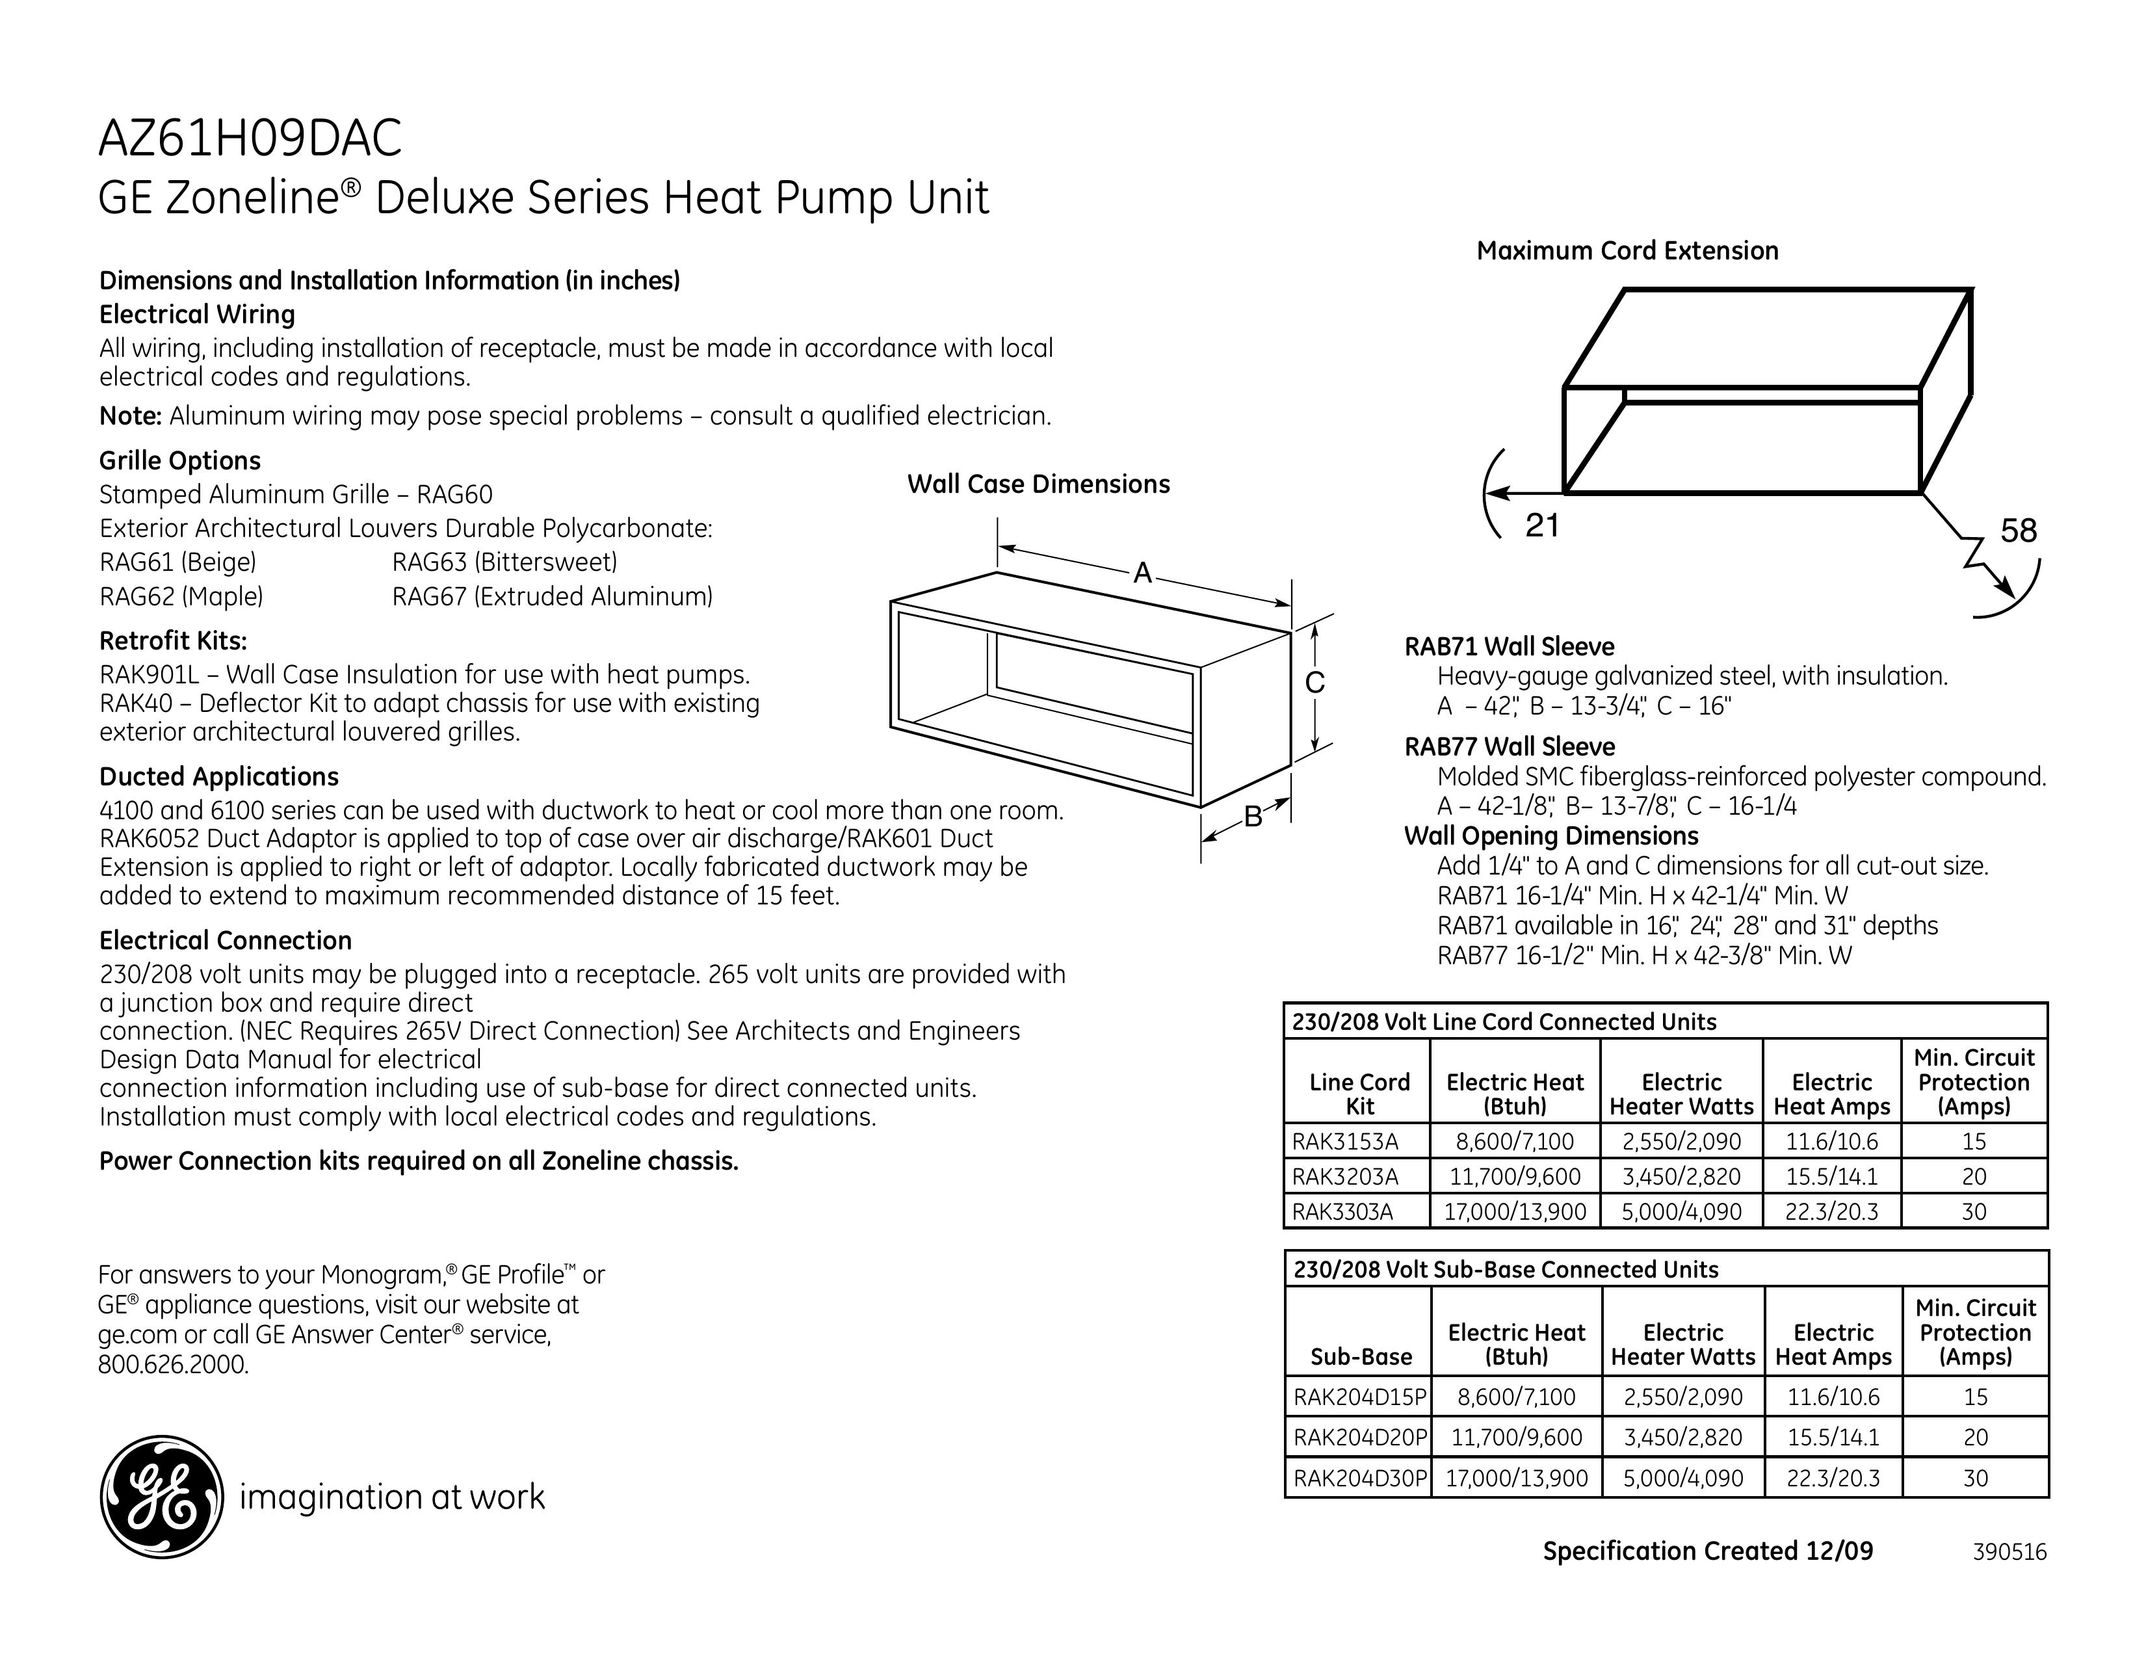 GE AZ61H09DAC Heat Pump User Manual